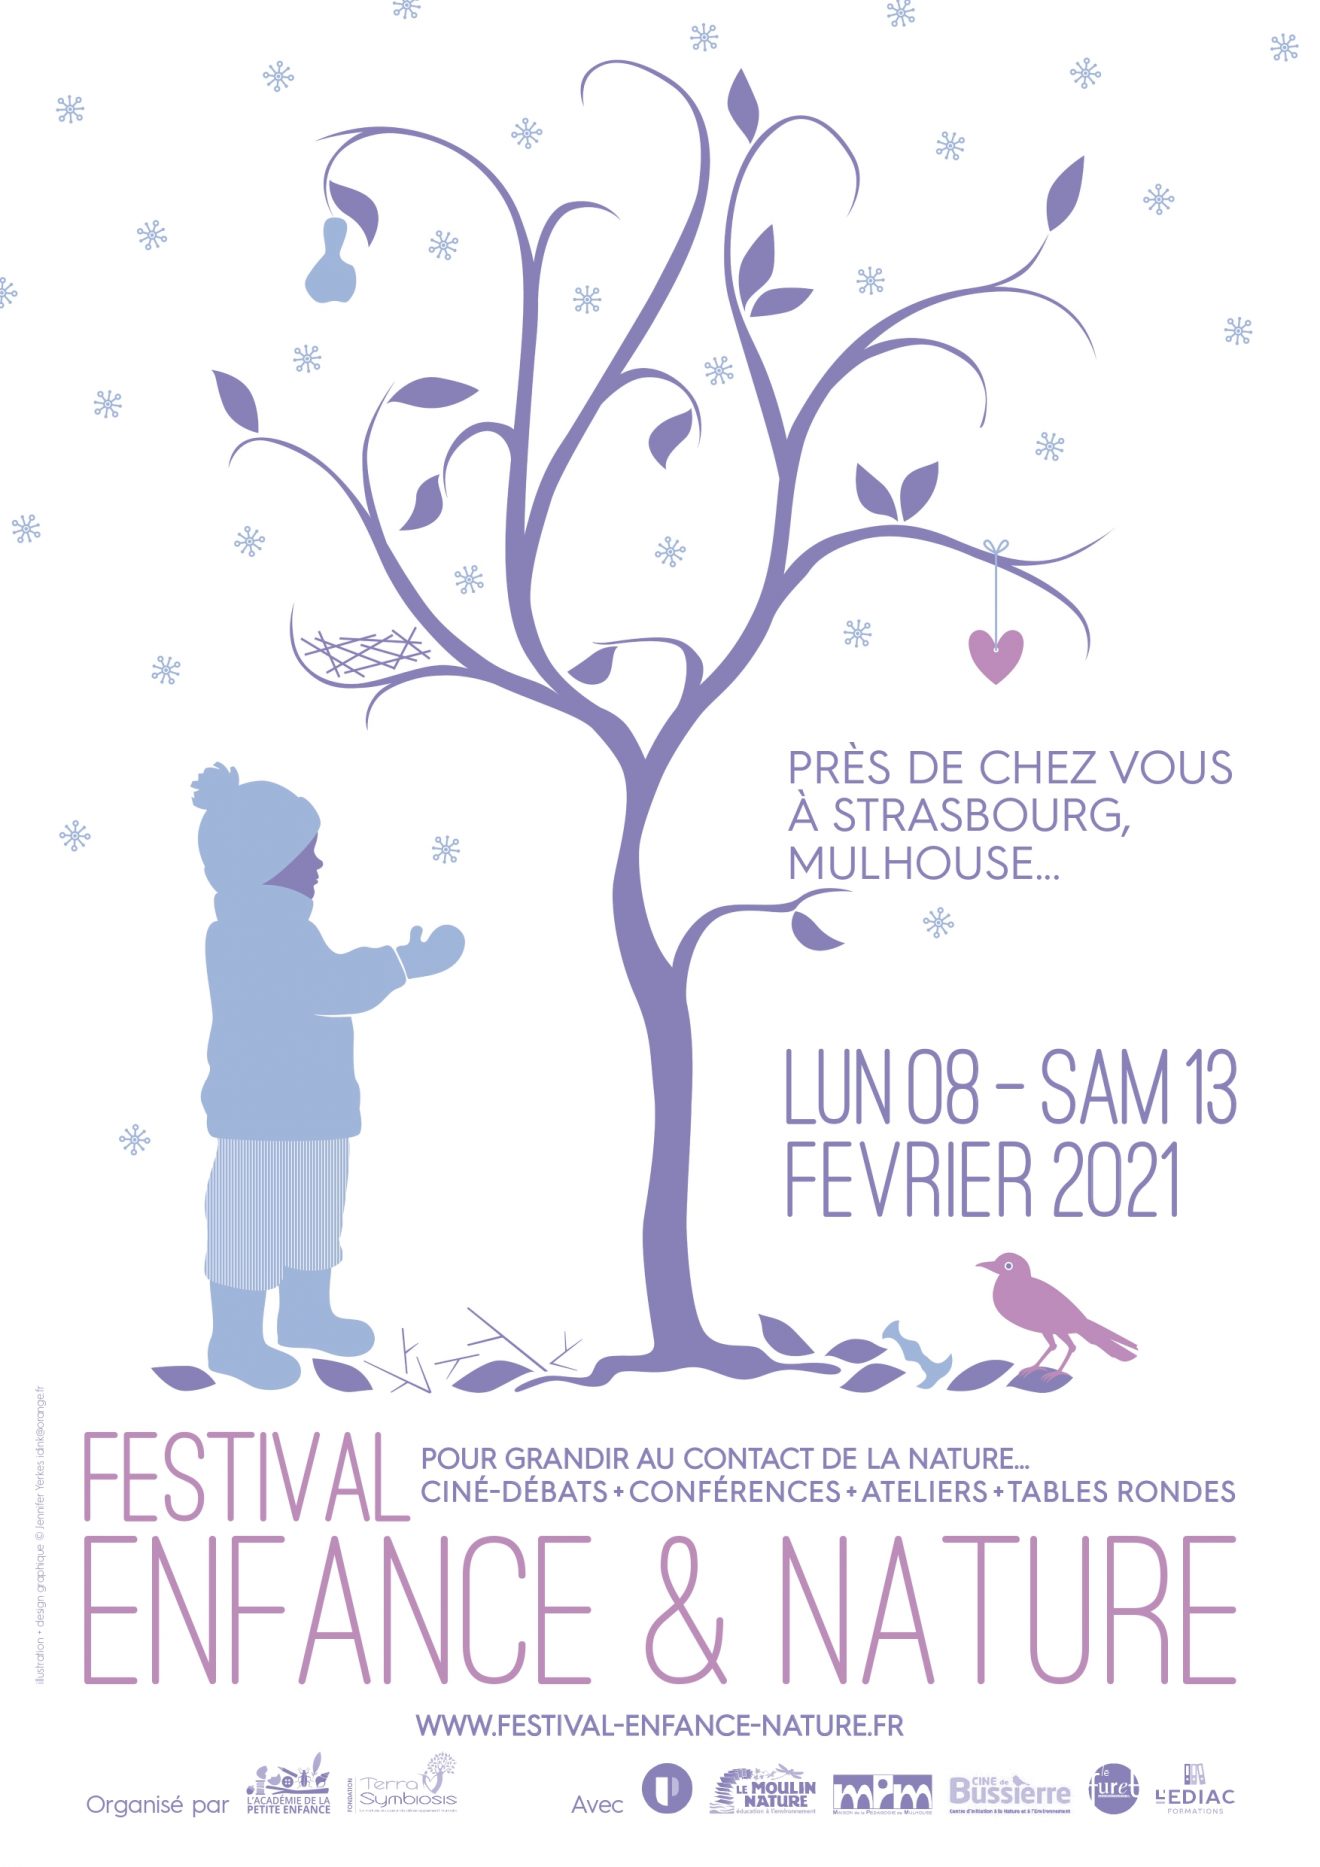 2021_Affiche festival Enfance et Nature_pages-to-jpg-0001